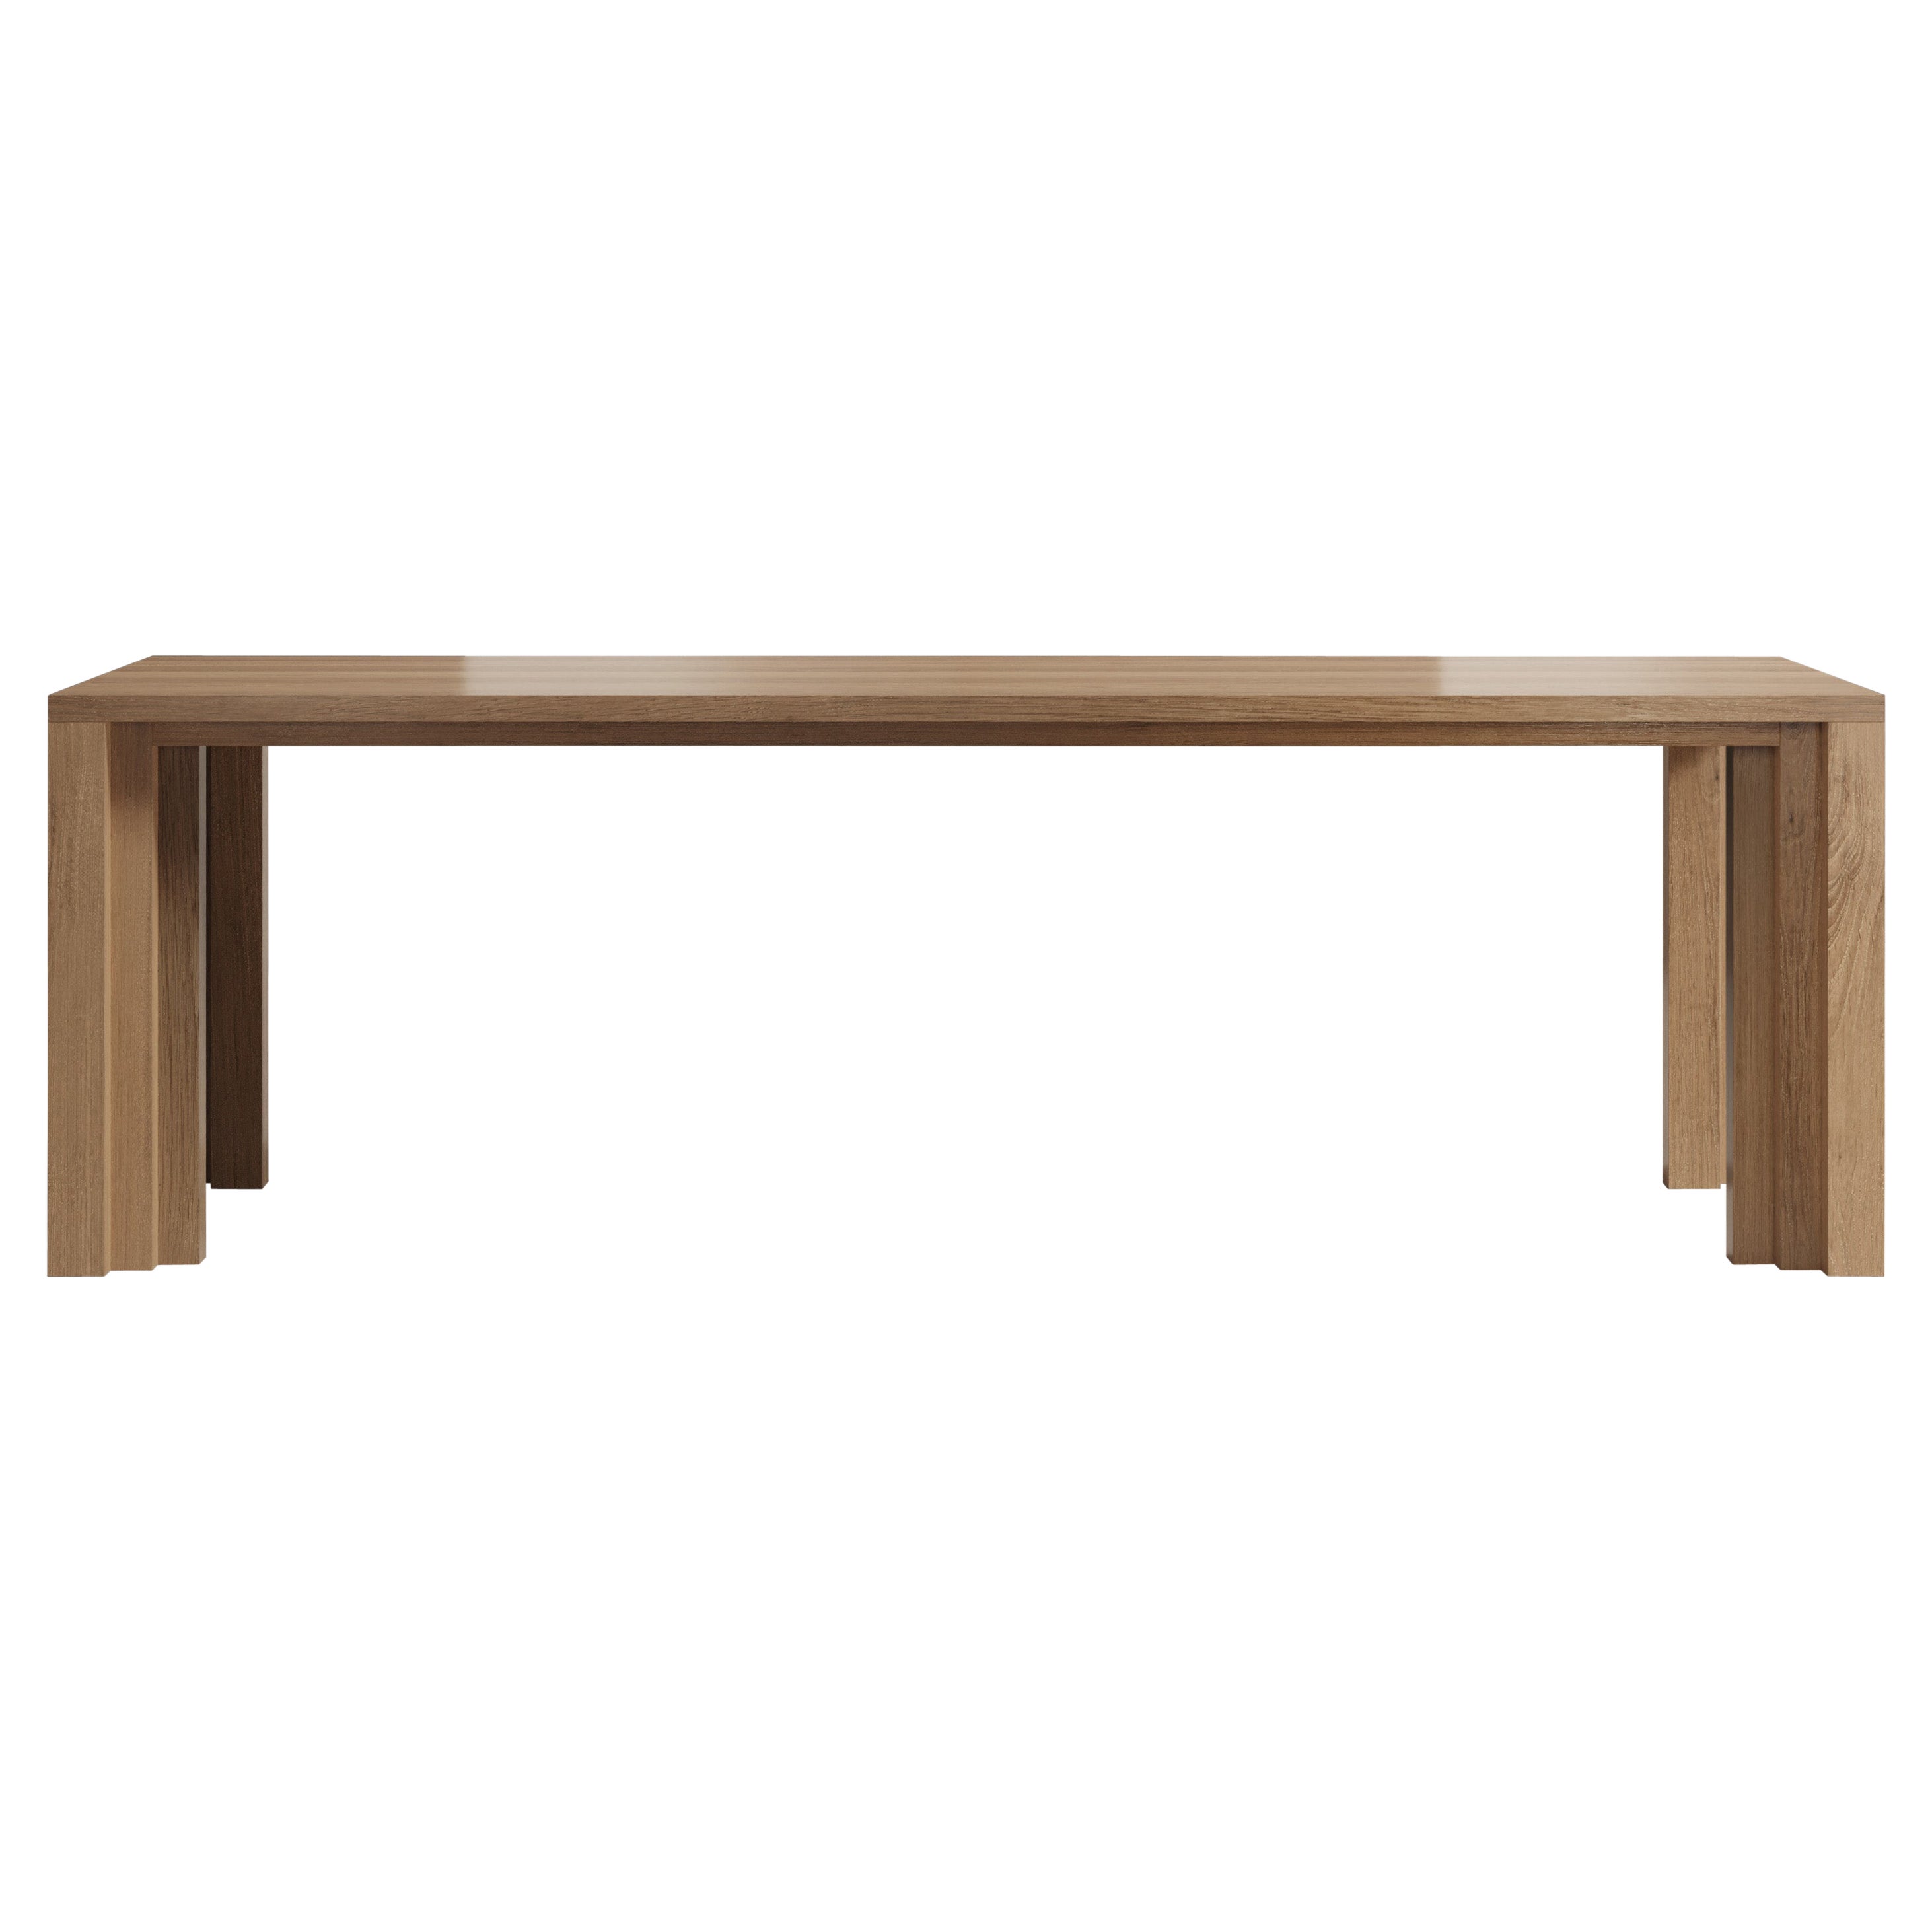 Modern Sculptural Solid Wooden Cadence Dining Table - Natural Light Oak For Sale